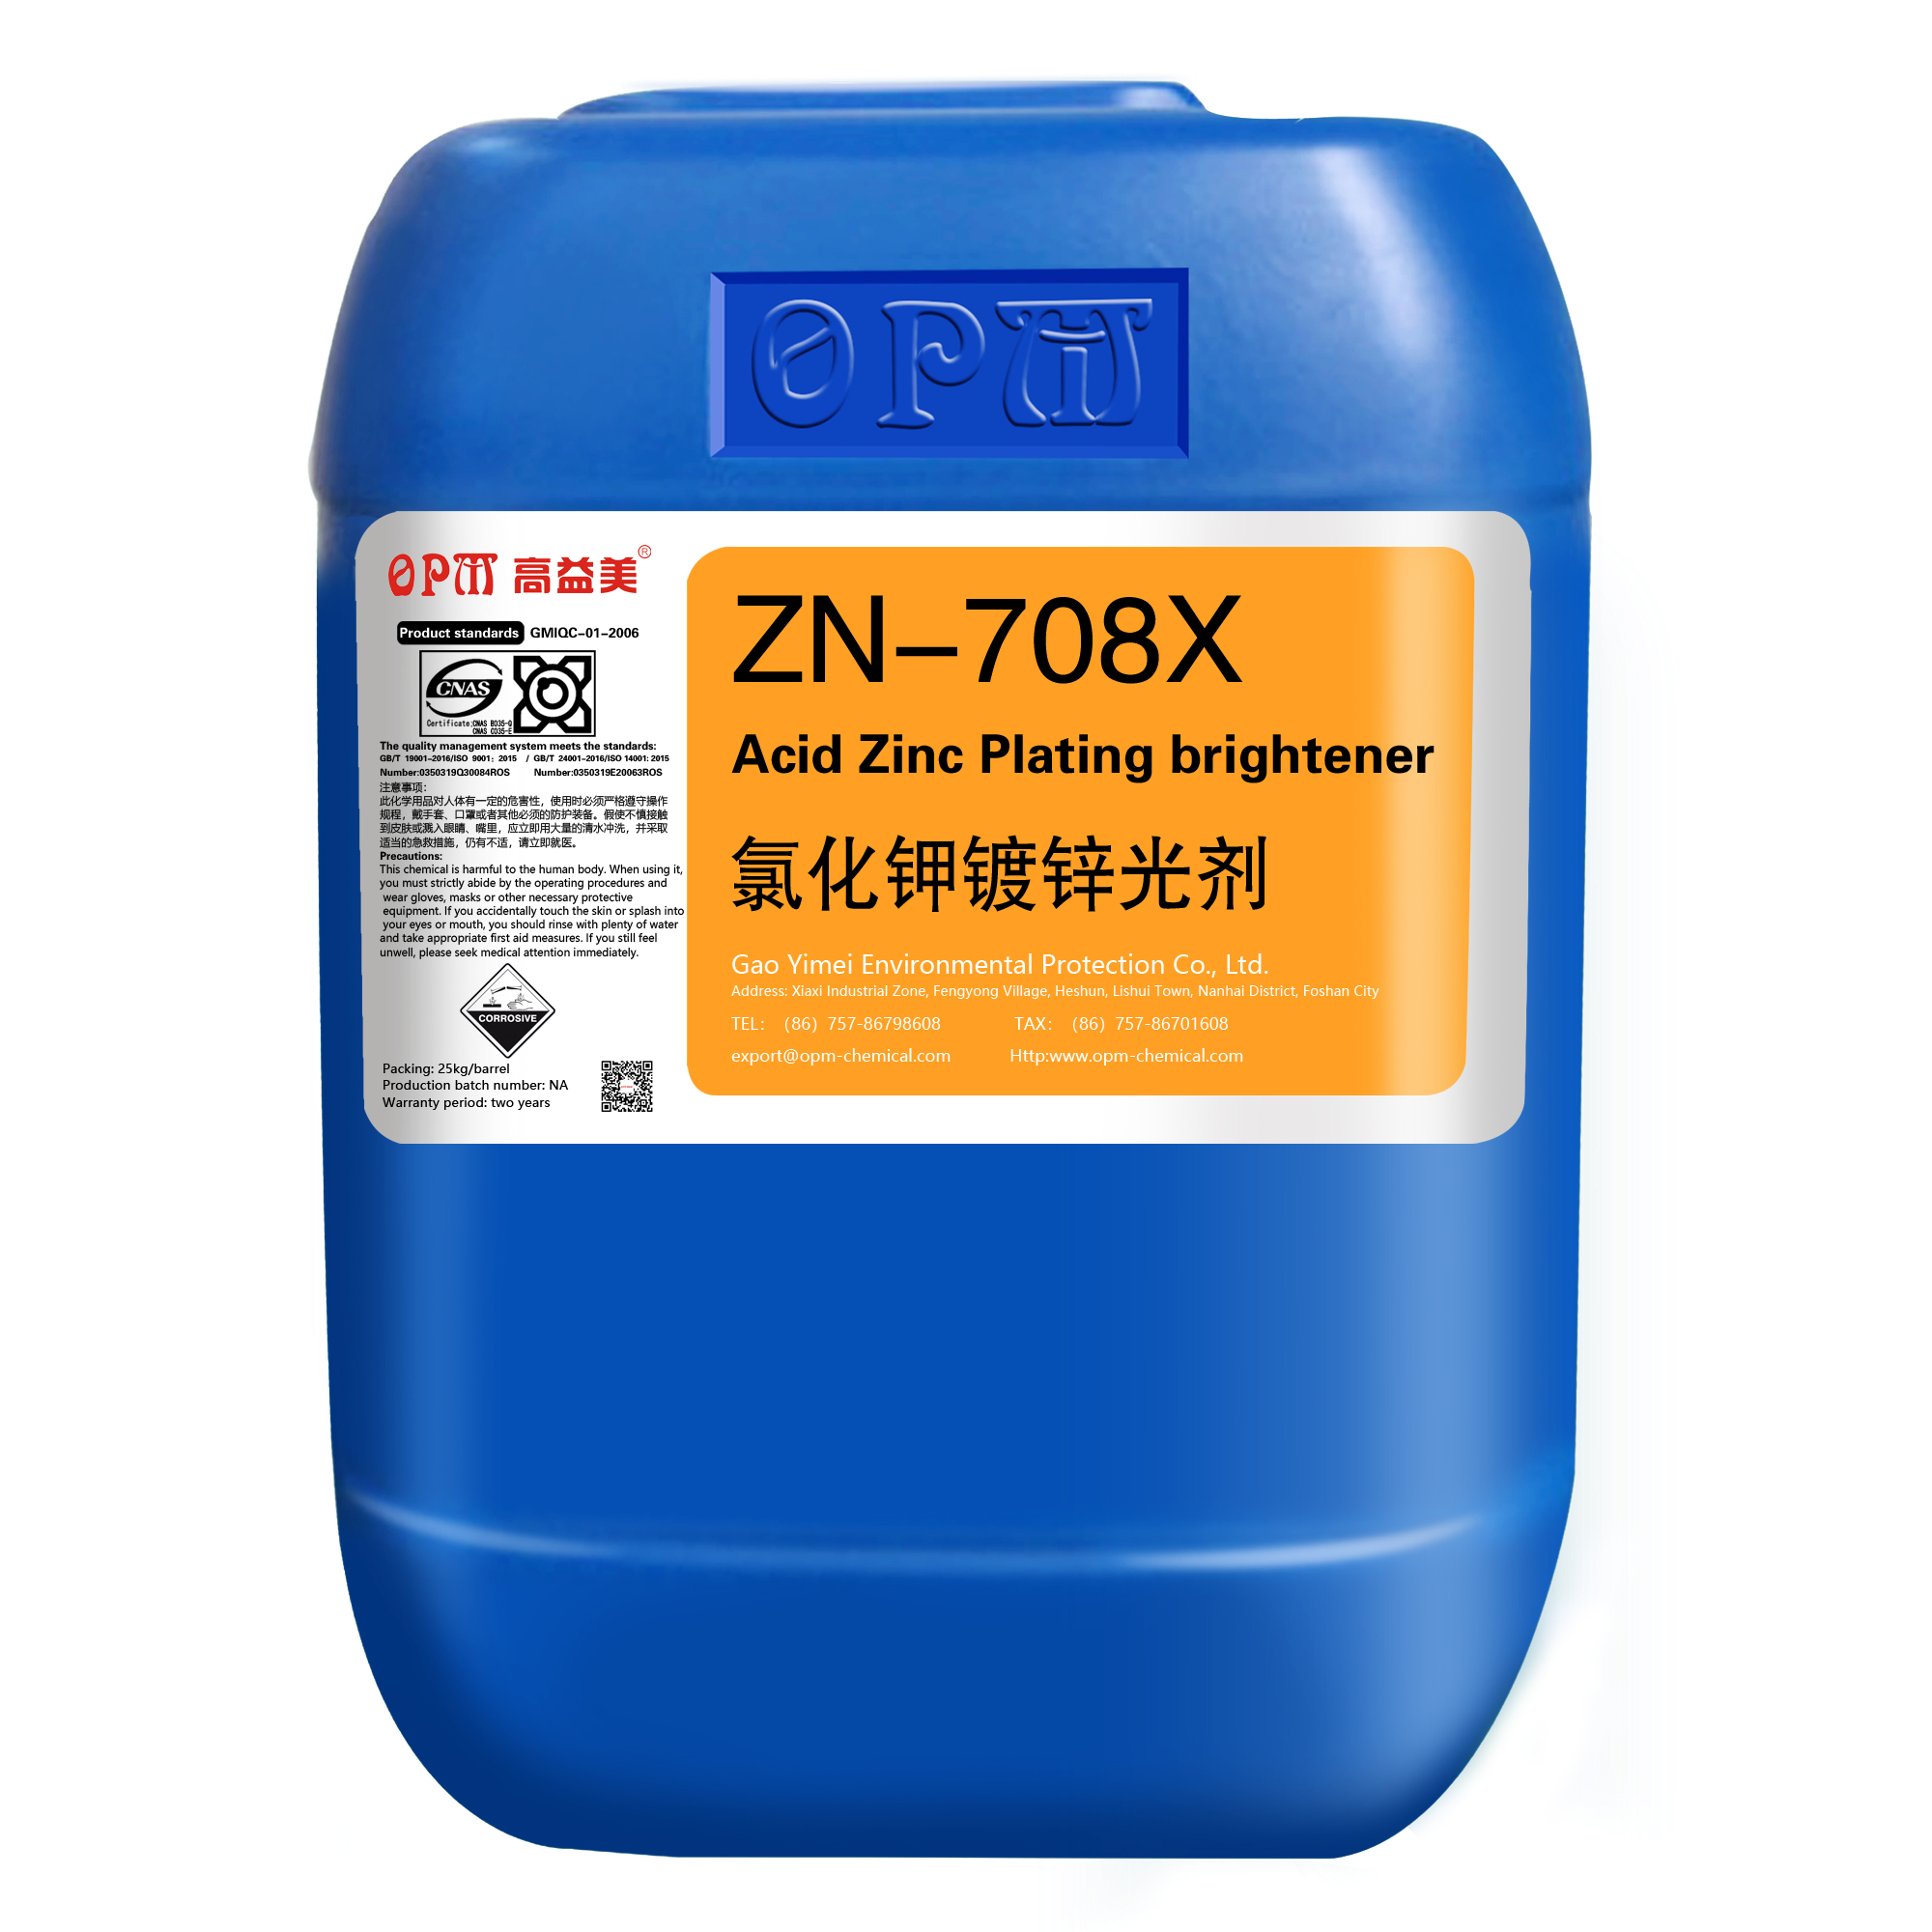 708X Acid Zinc Plating brightener